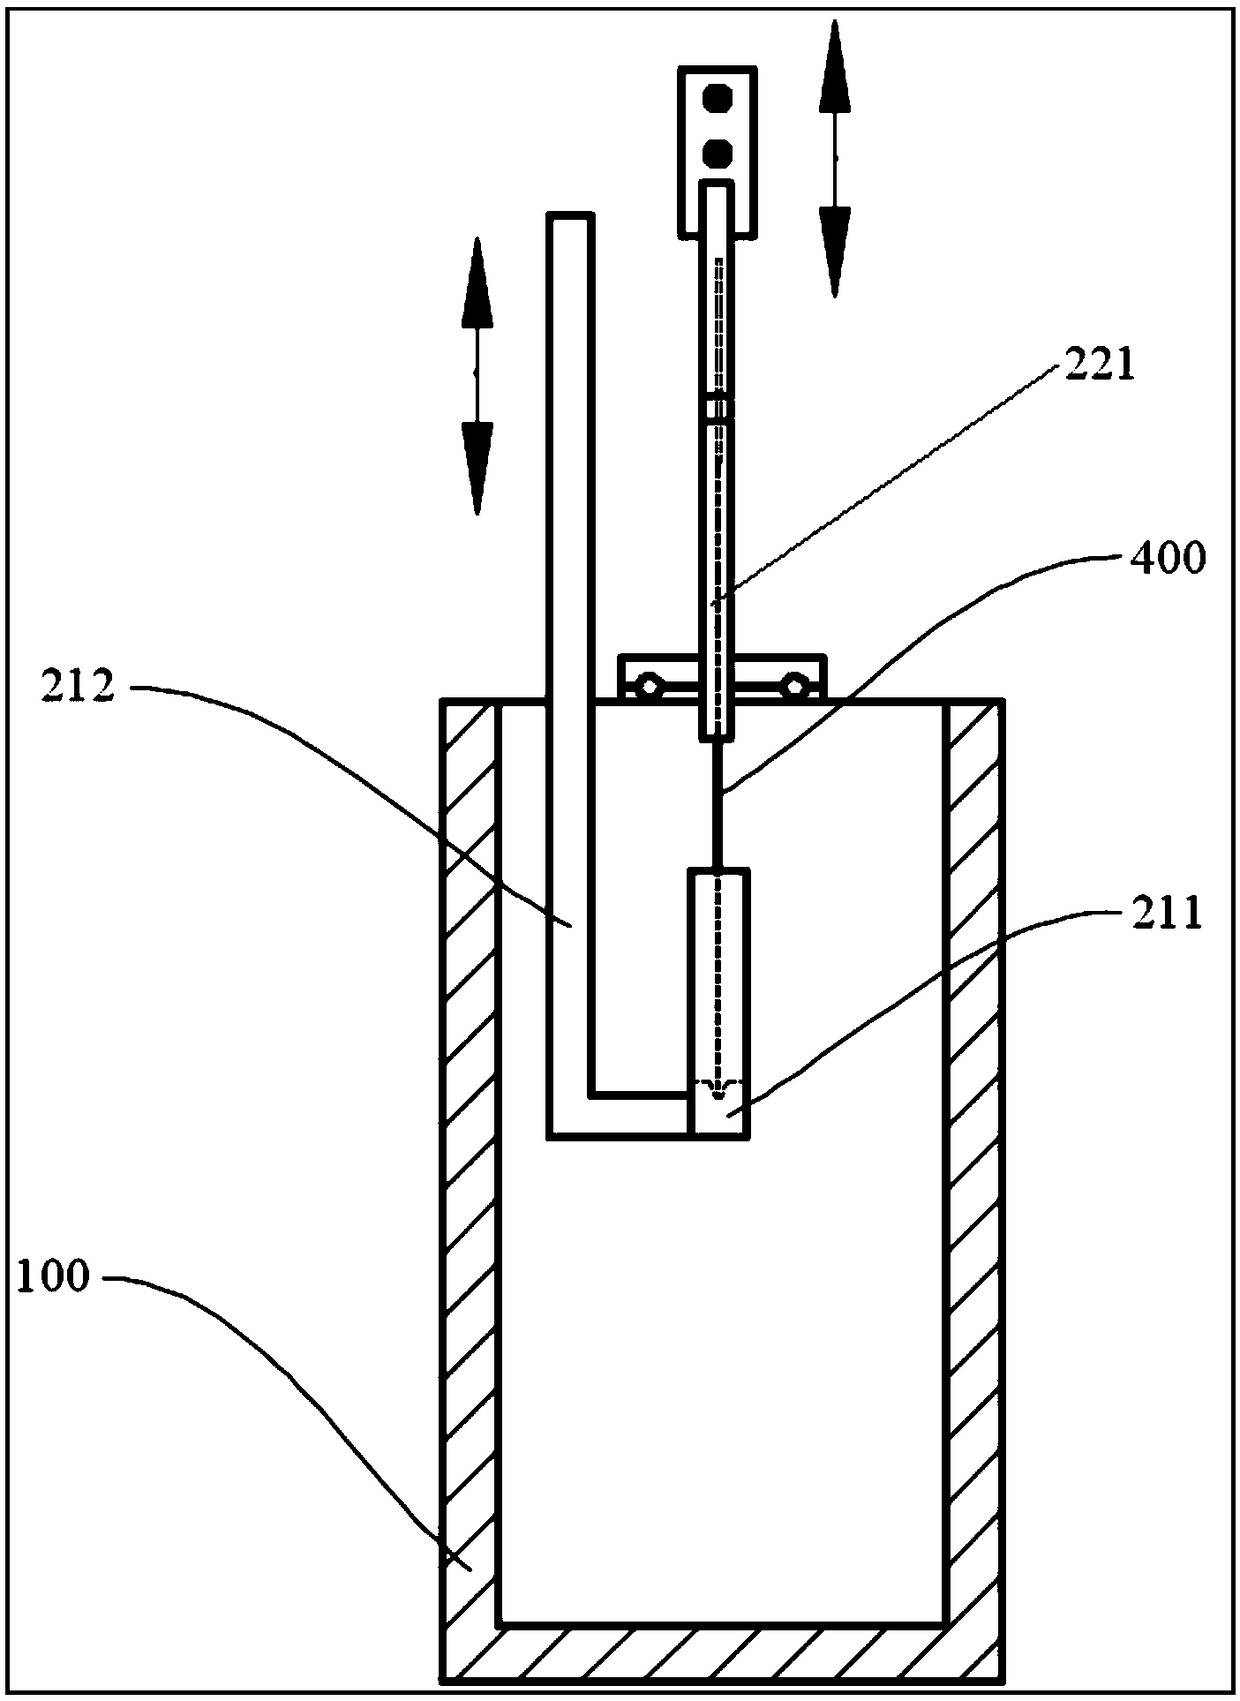 Wafer drying device and method based on Marangoni effect